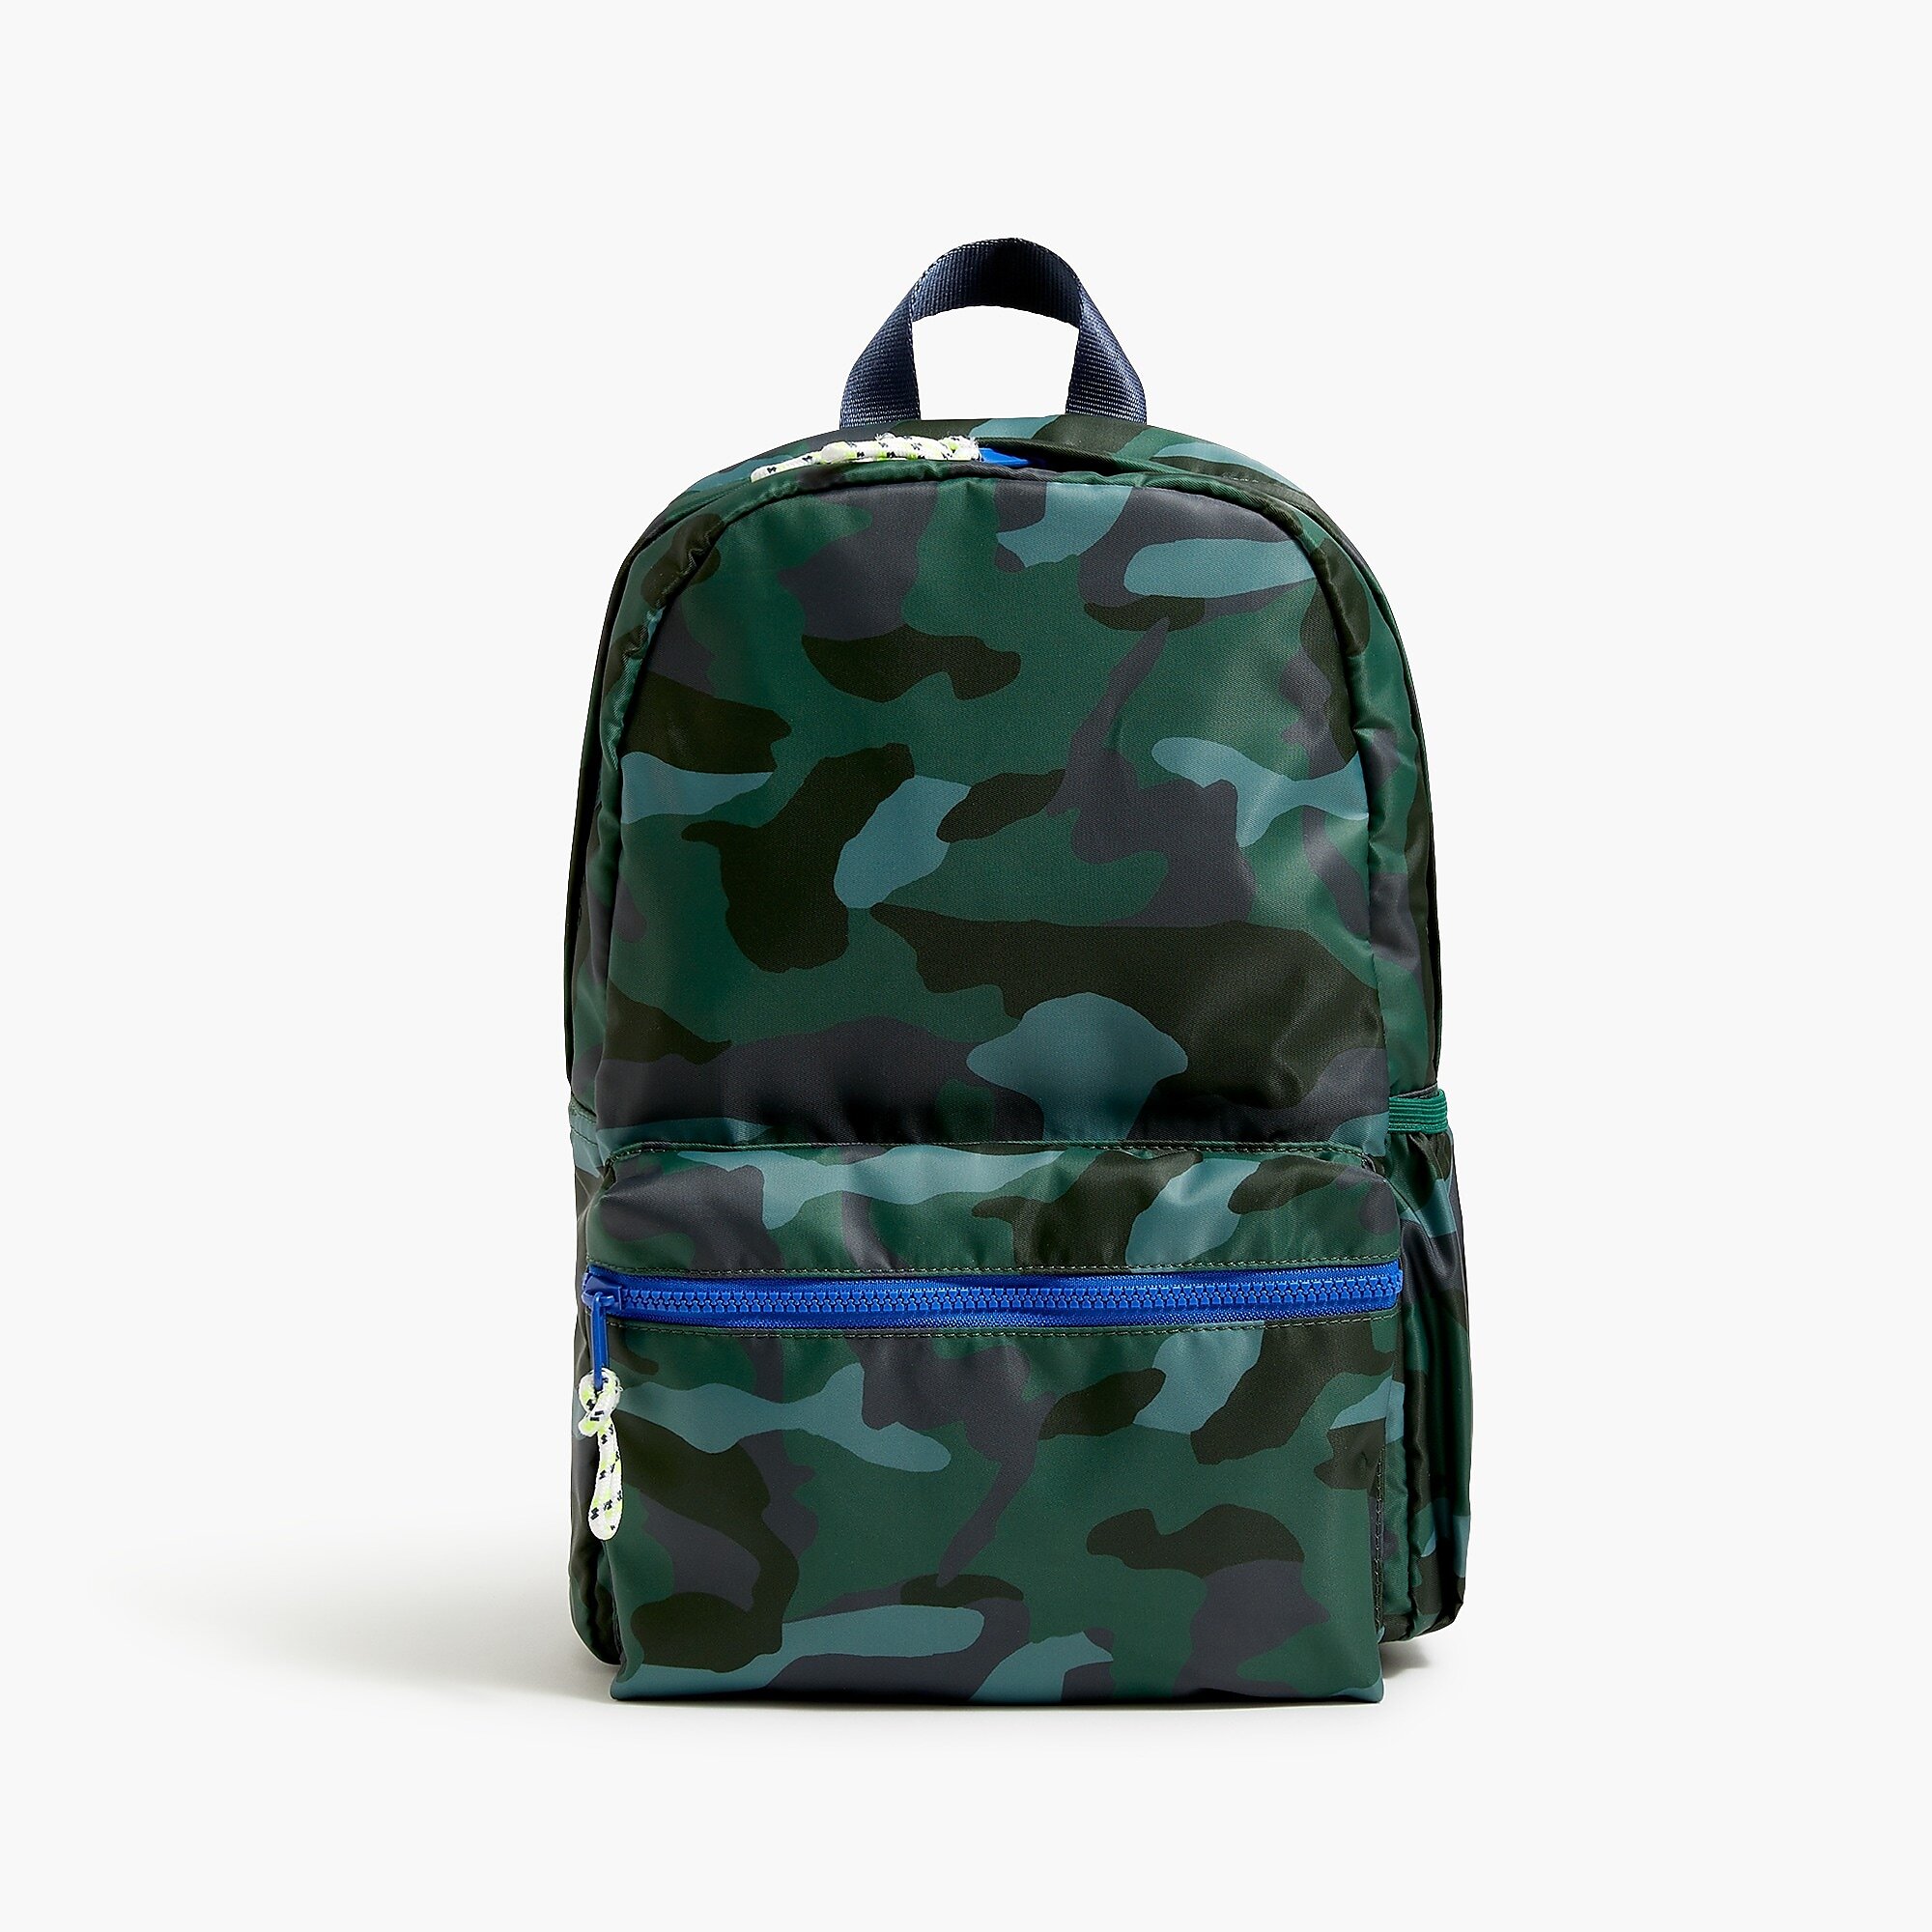 Kids' camo backpack - J Crew.jpeg